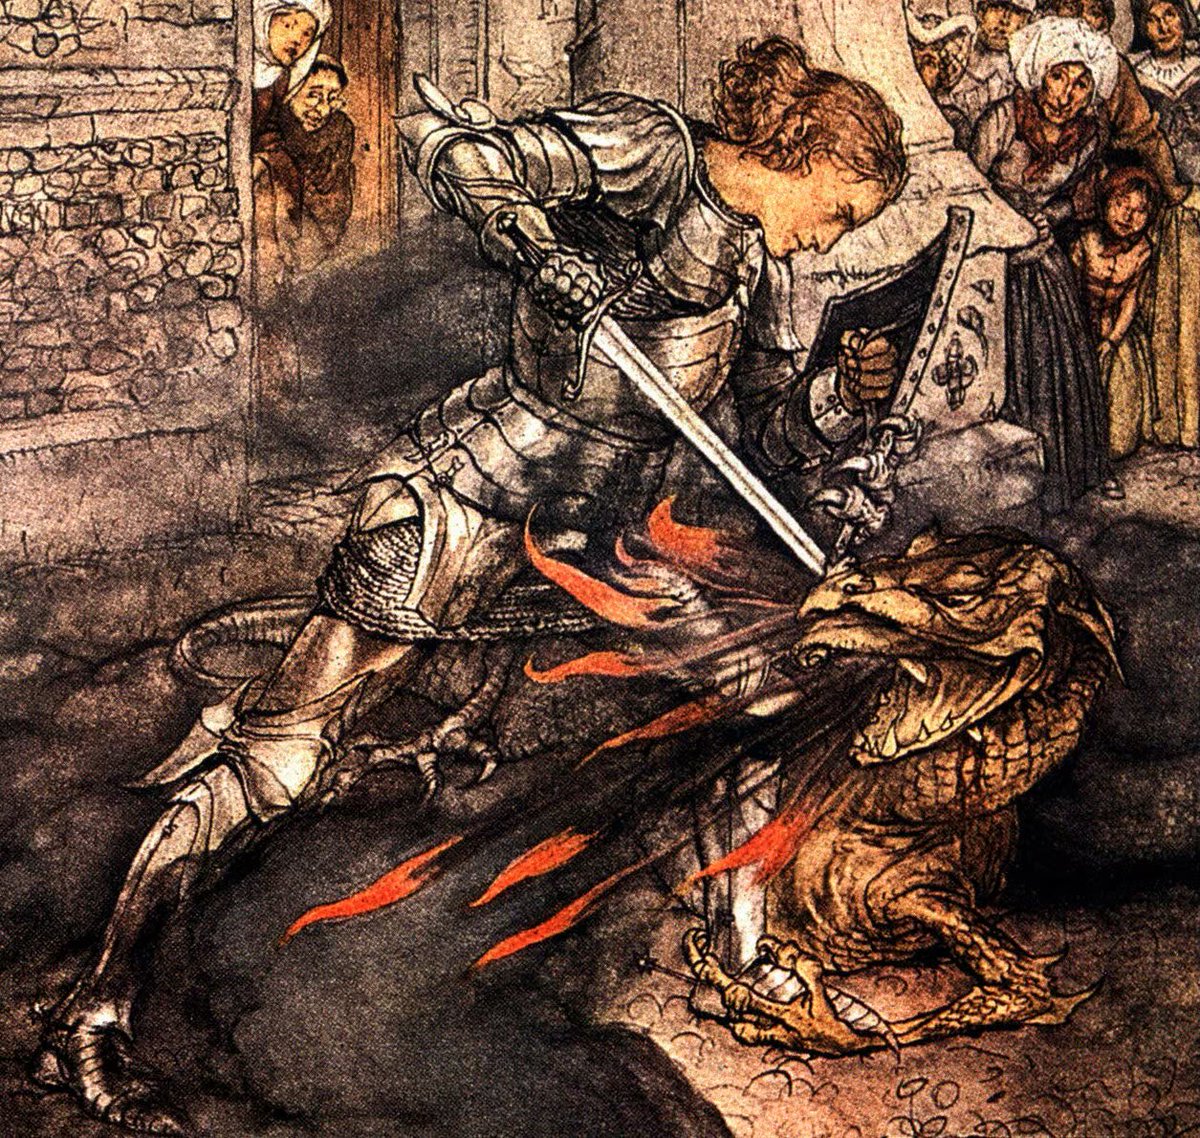 Sir Lancelot and the Dragon 
— Arthur Rackham (1917)